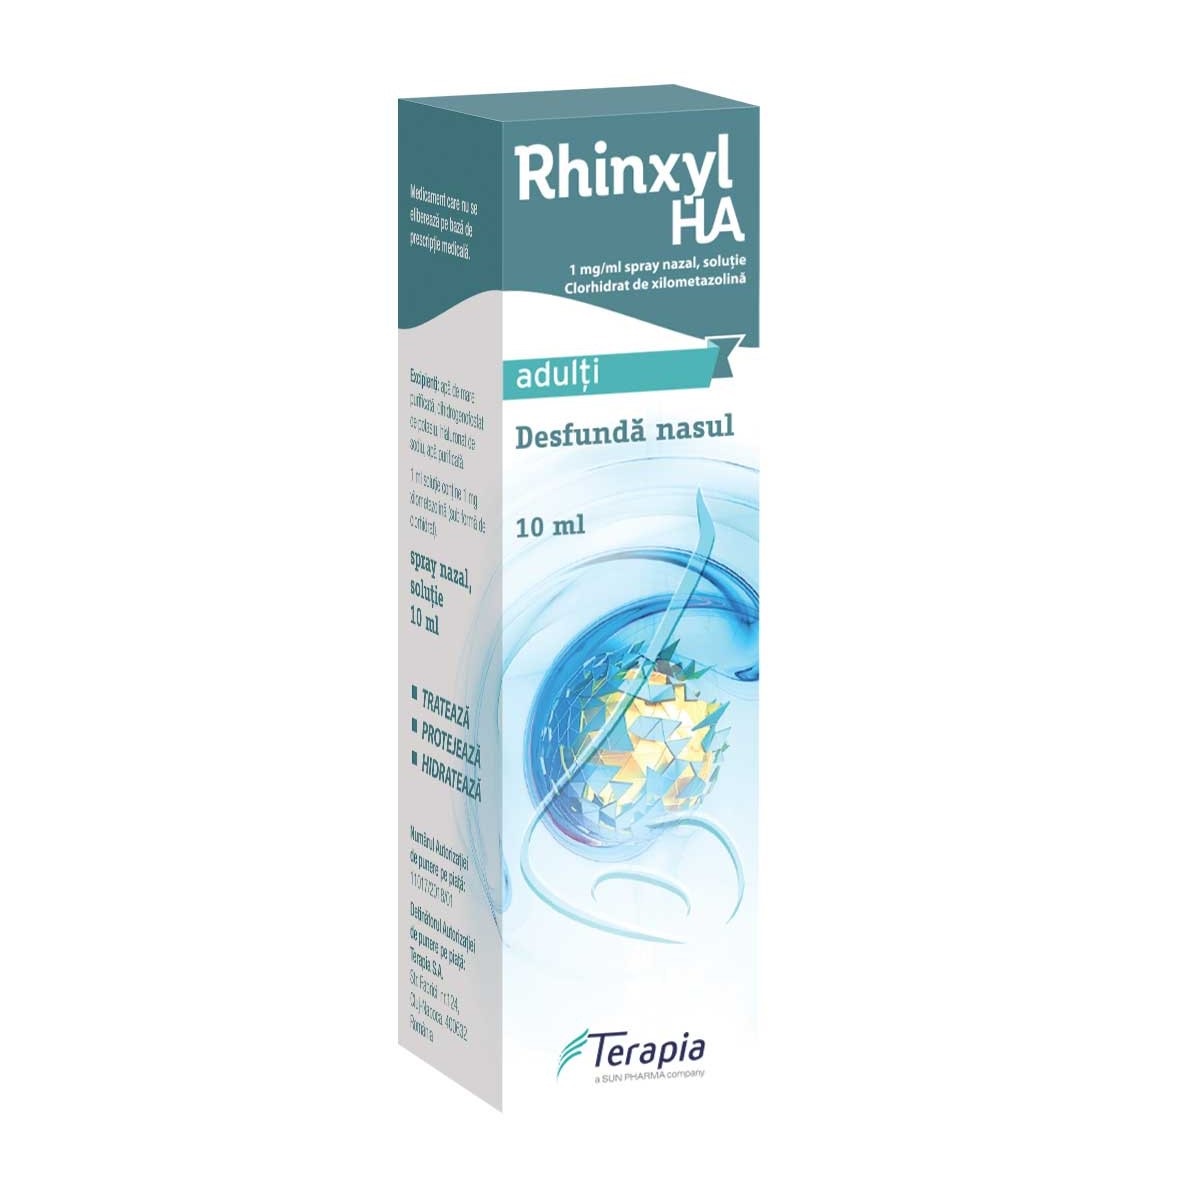 Rhinxyl HA 1mg/ml spray bazal 10ml